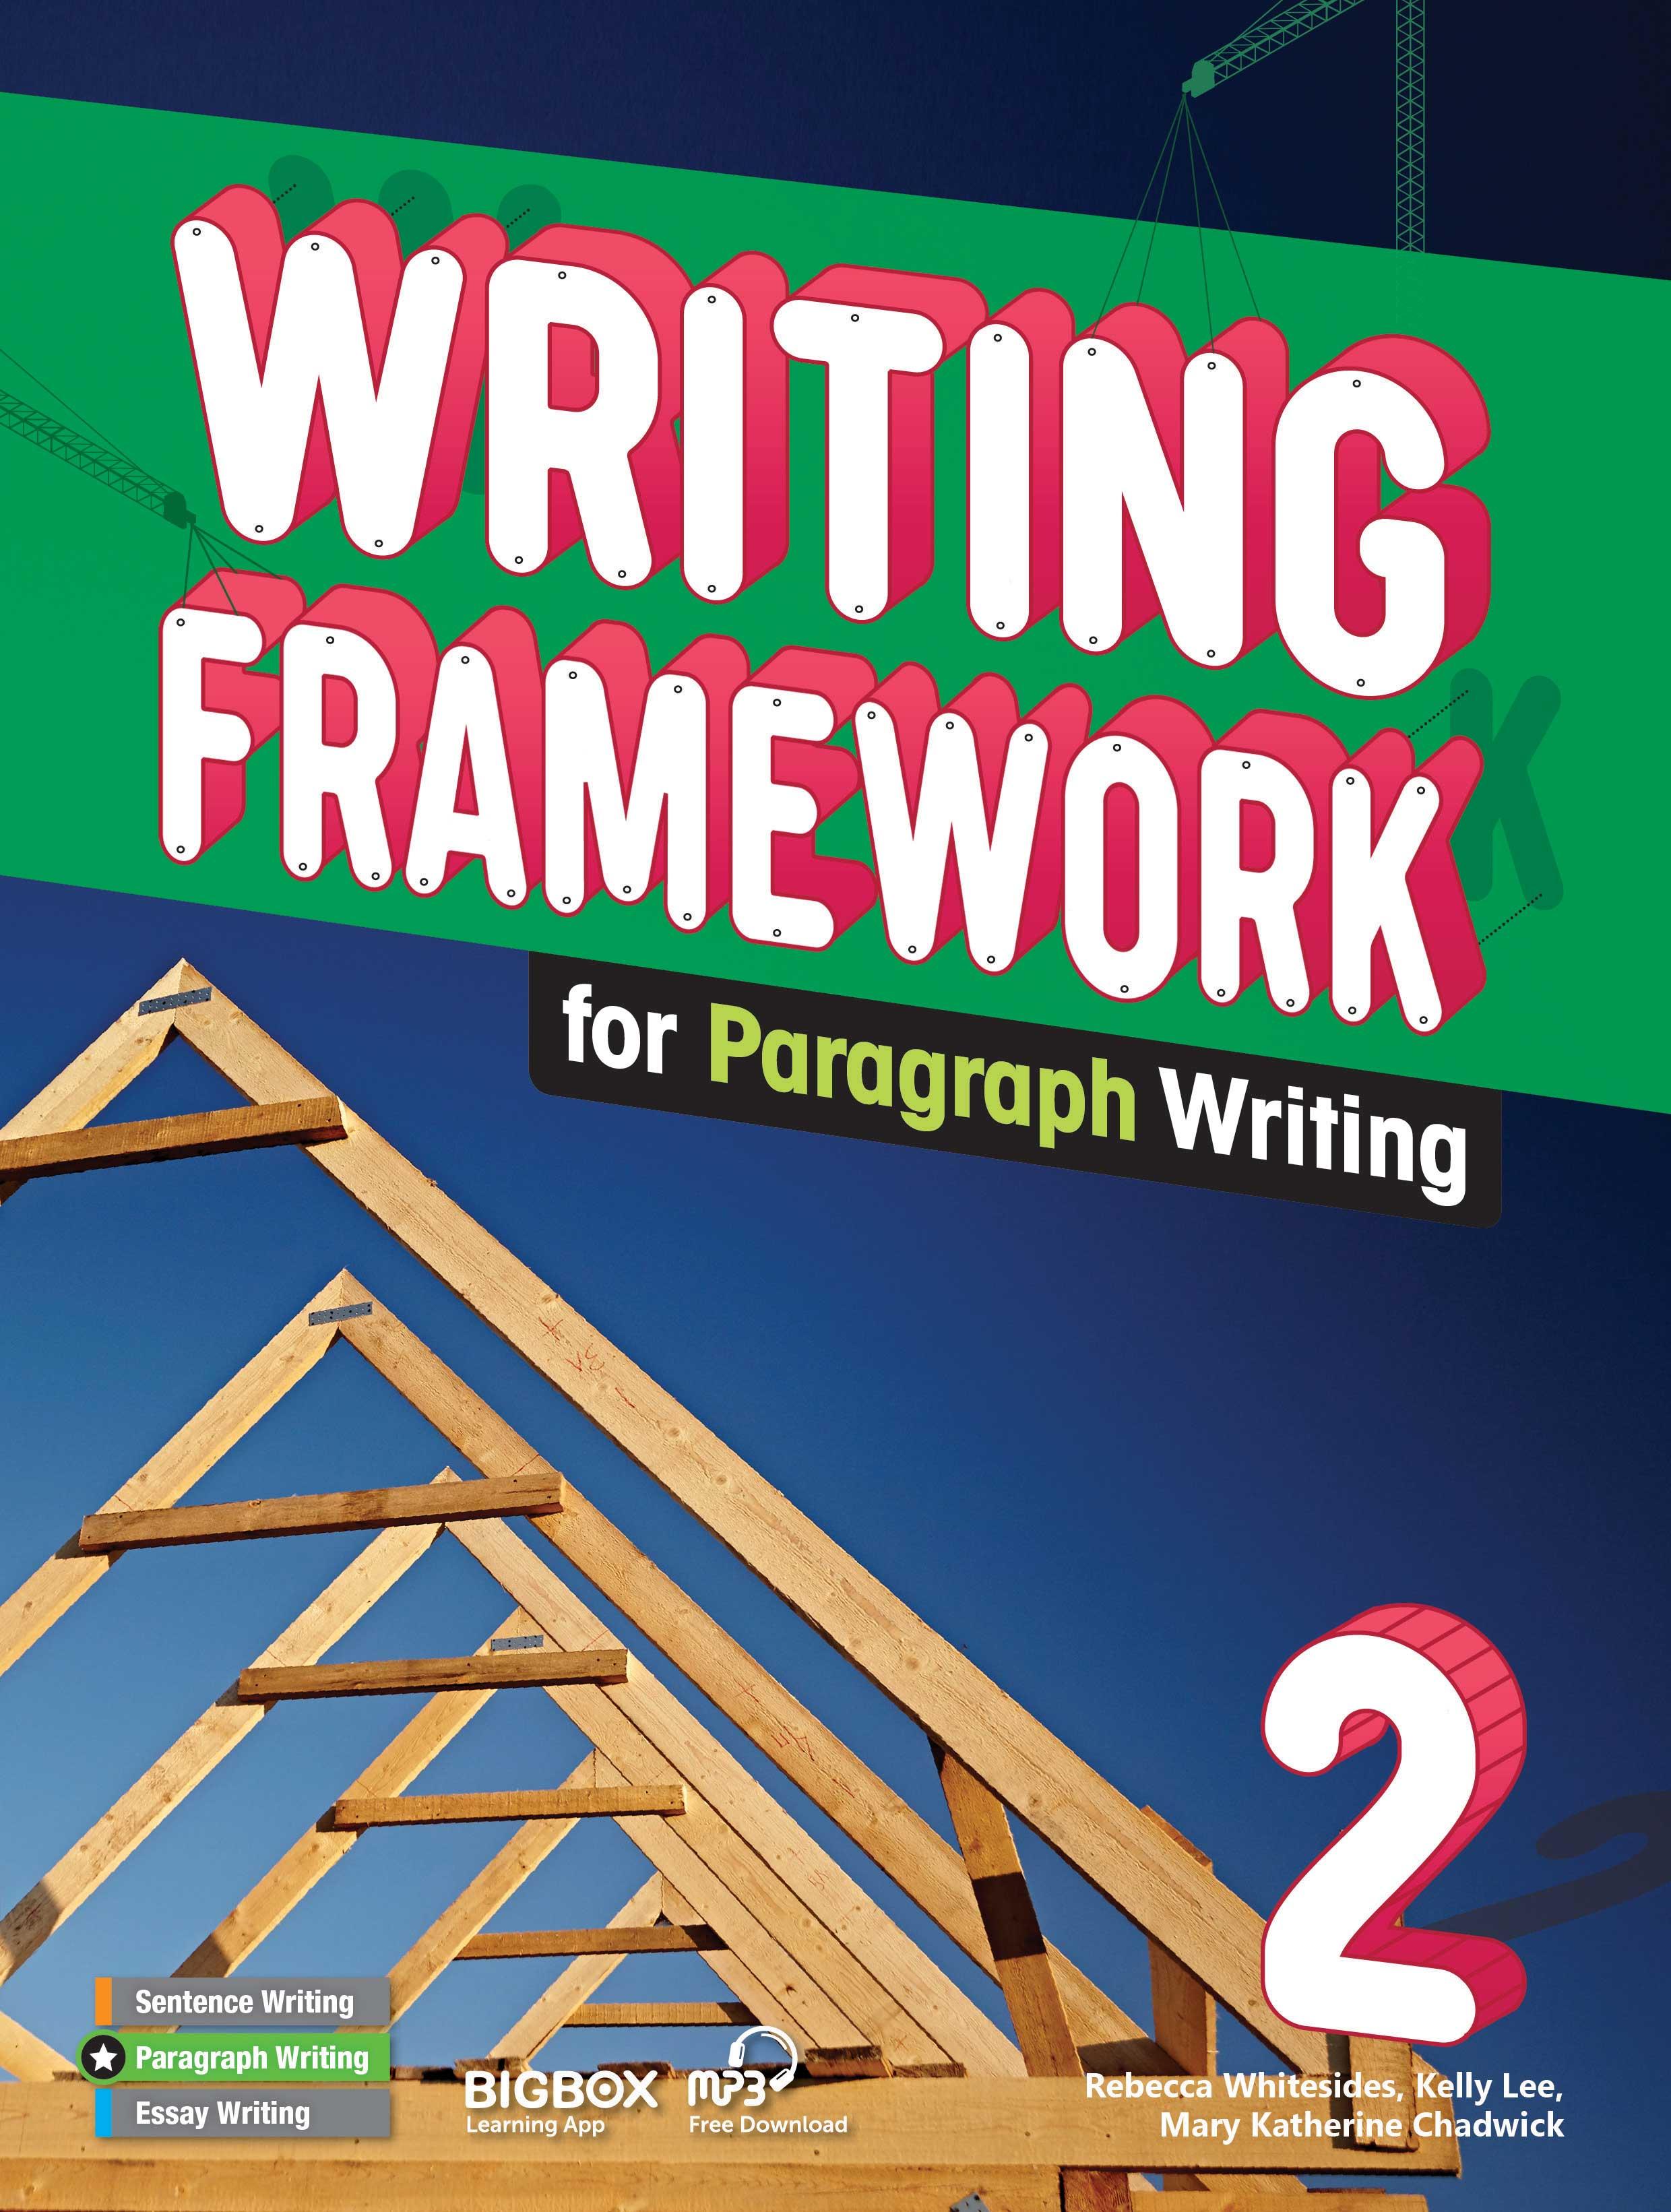 Writing Framework Paragraph Writing 2 - Student Book with Workbook Upper-Elementary_Intermediate A2